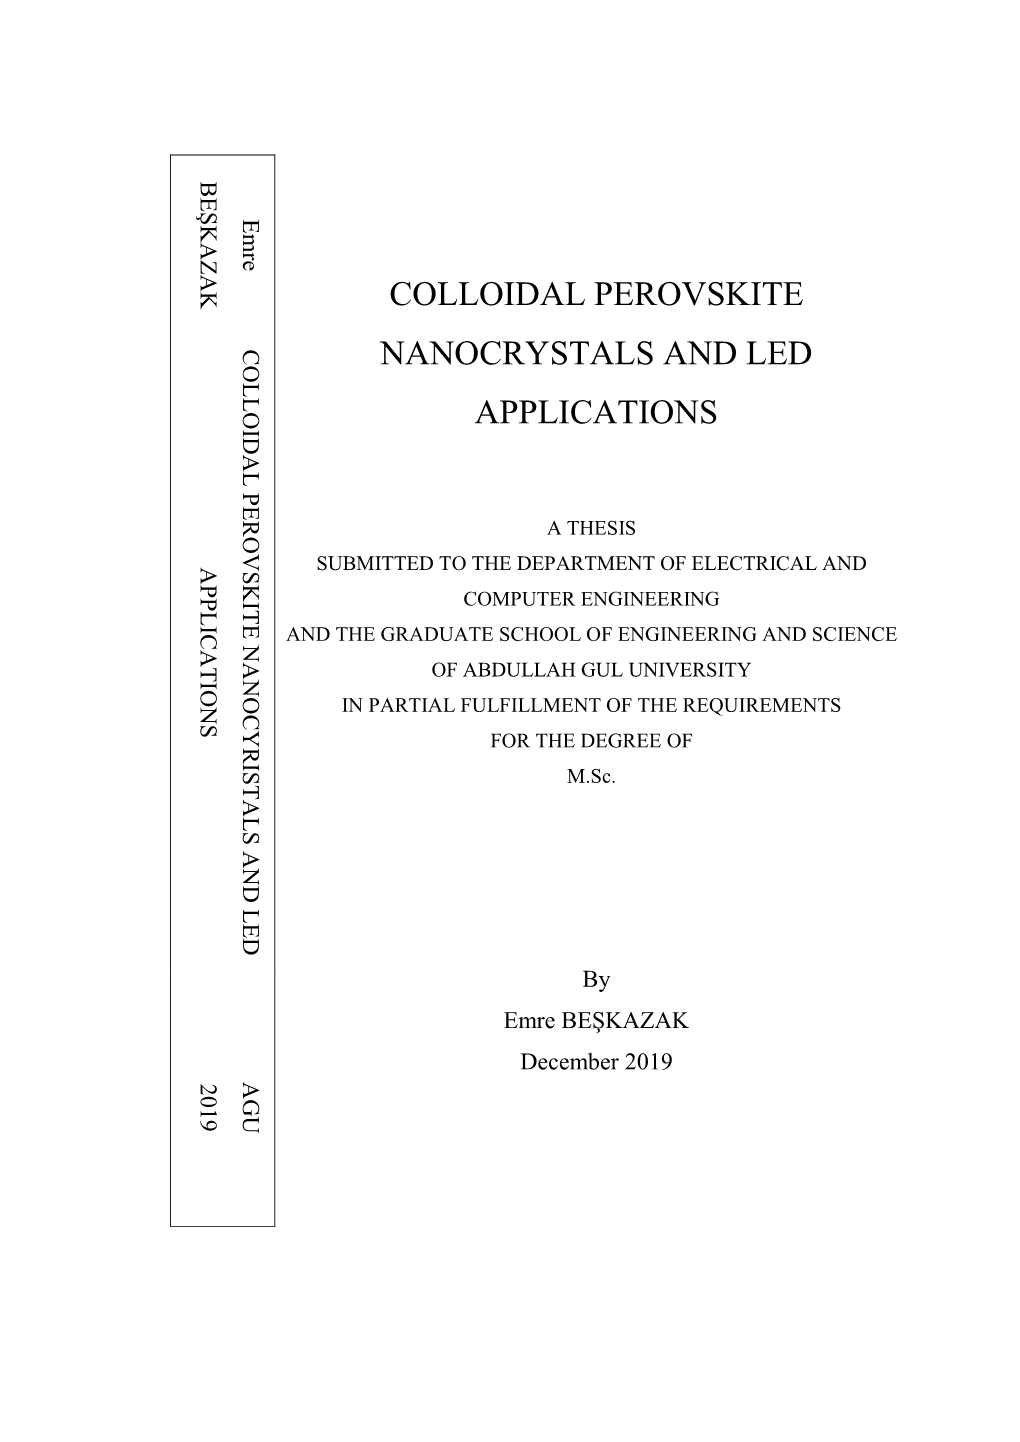 Colloidal Perovskite Nanocrystals and Led Applications